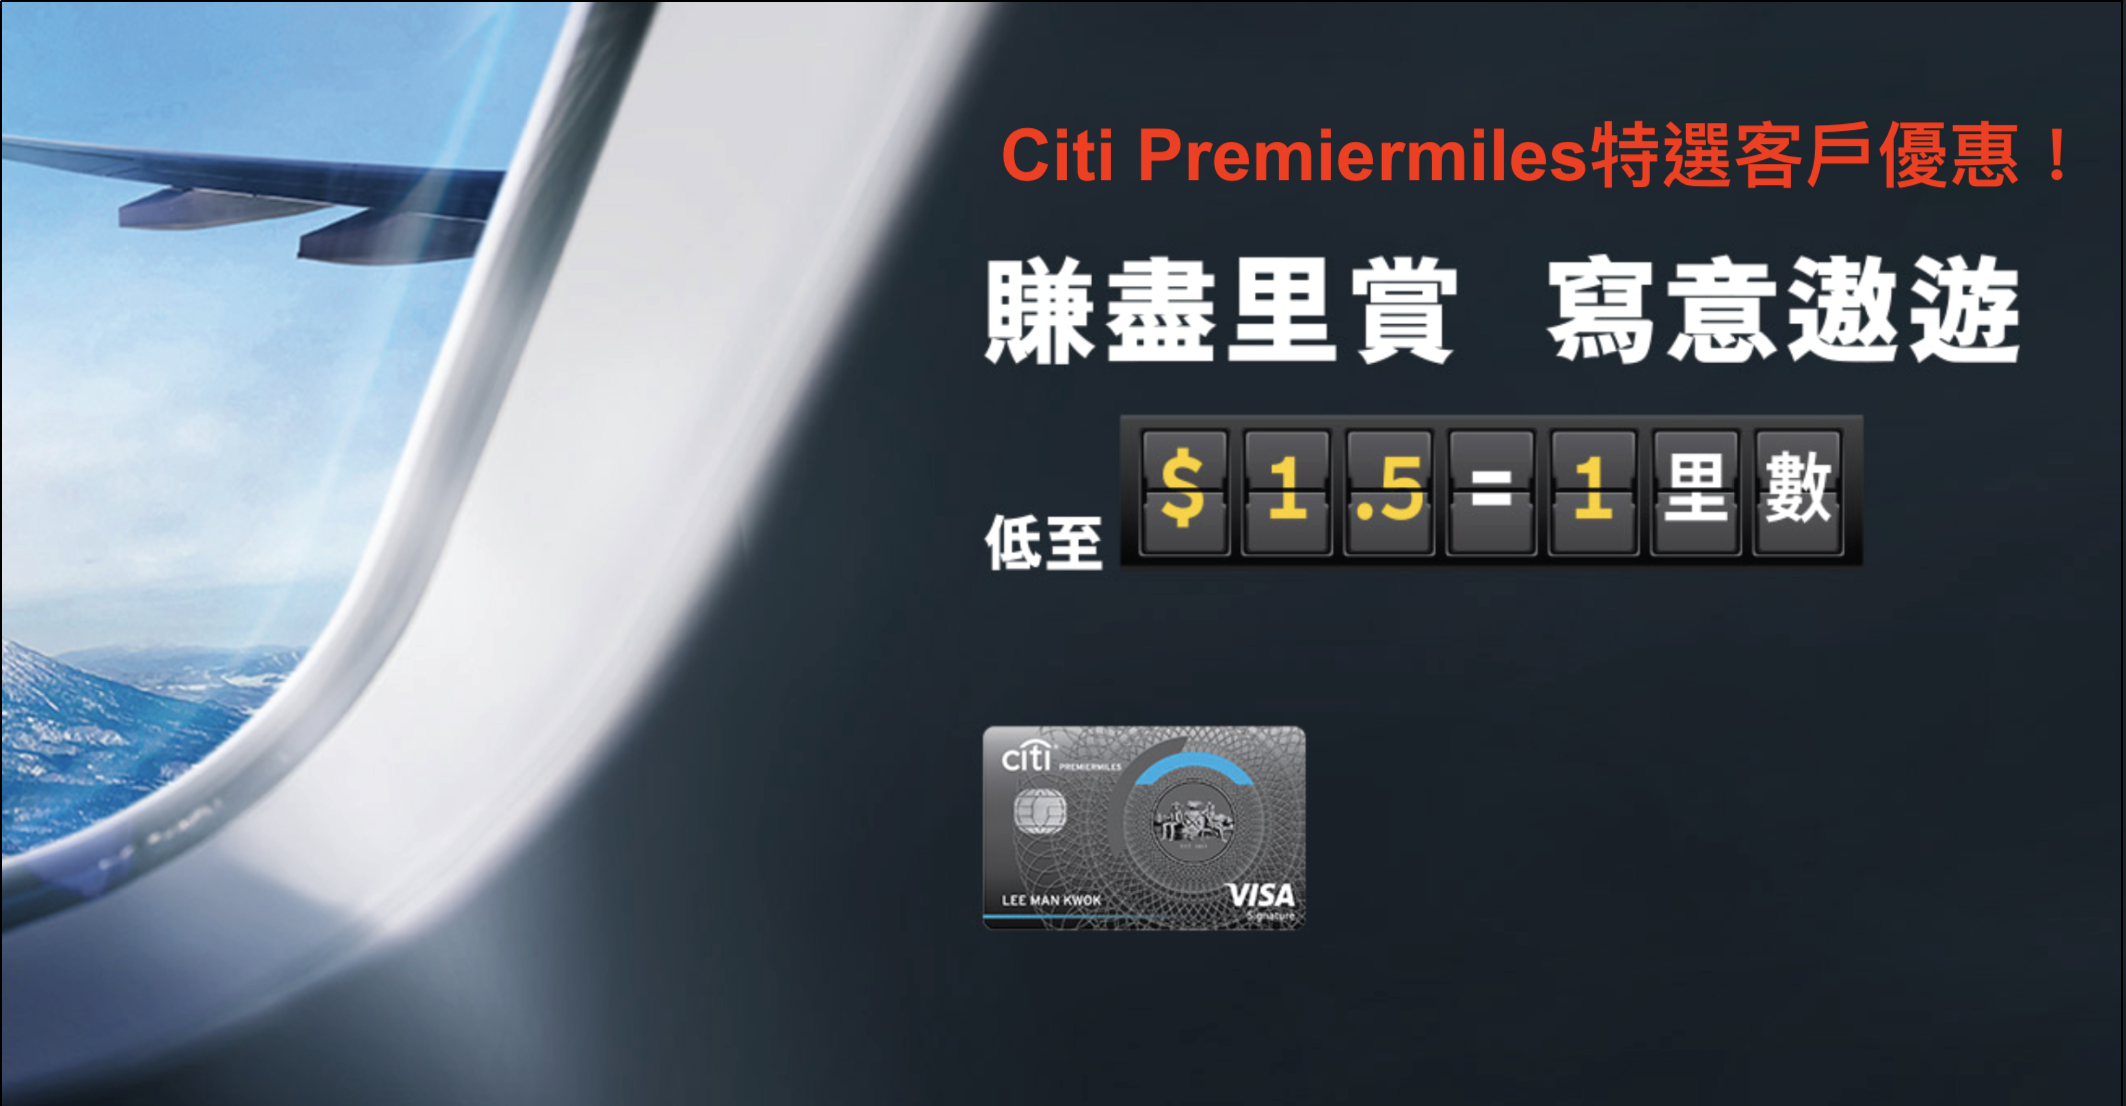 Citi PremierMiles信用卡2019簽賬推廣！特選客戶可賺取高達20,000額外里數！